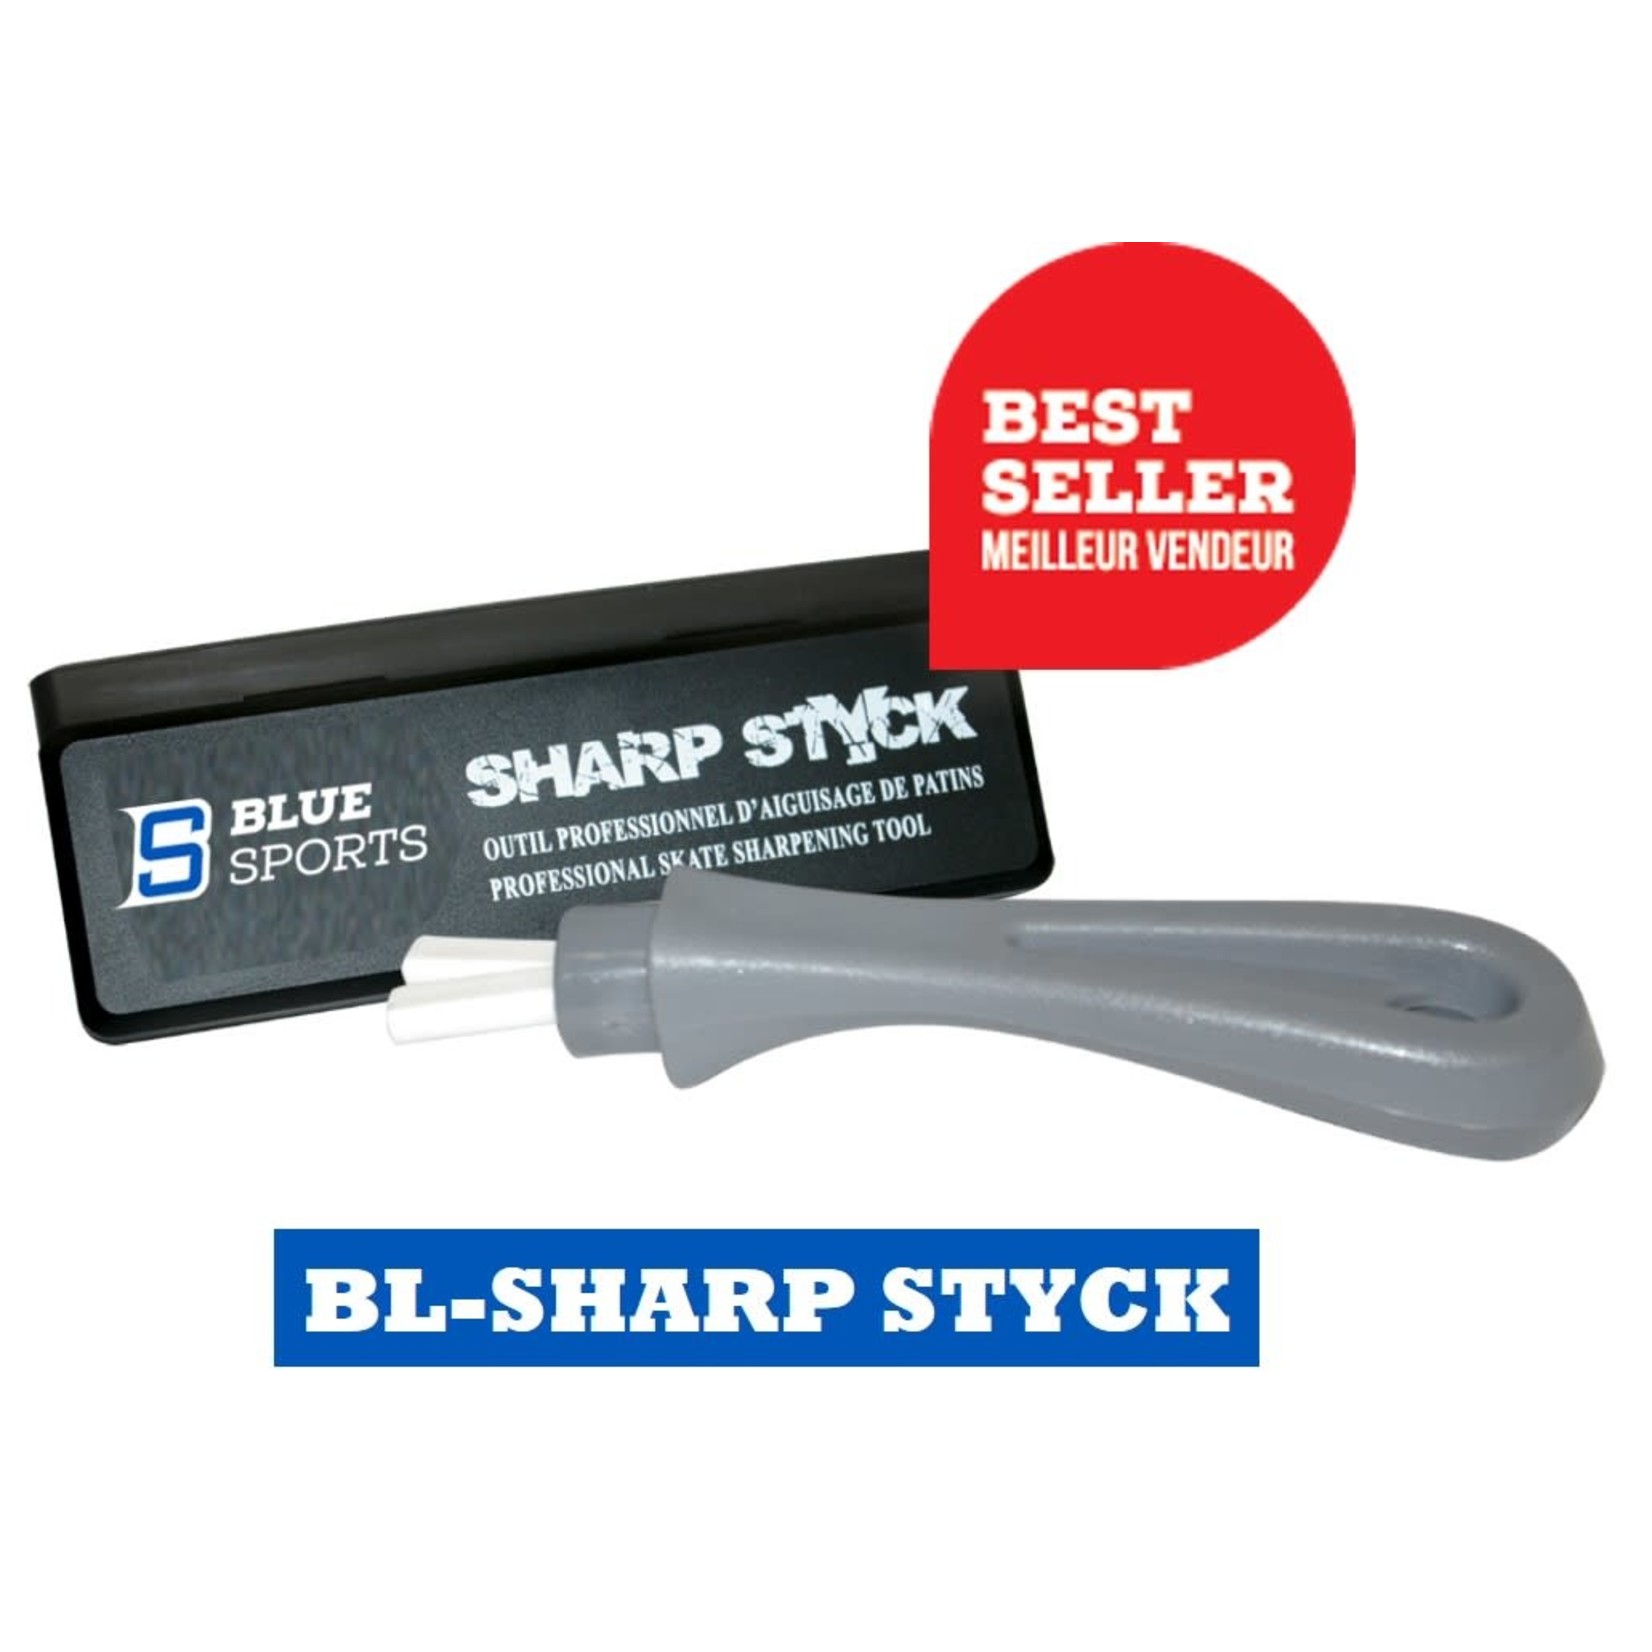 Blue Sports SHARP STYCK